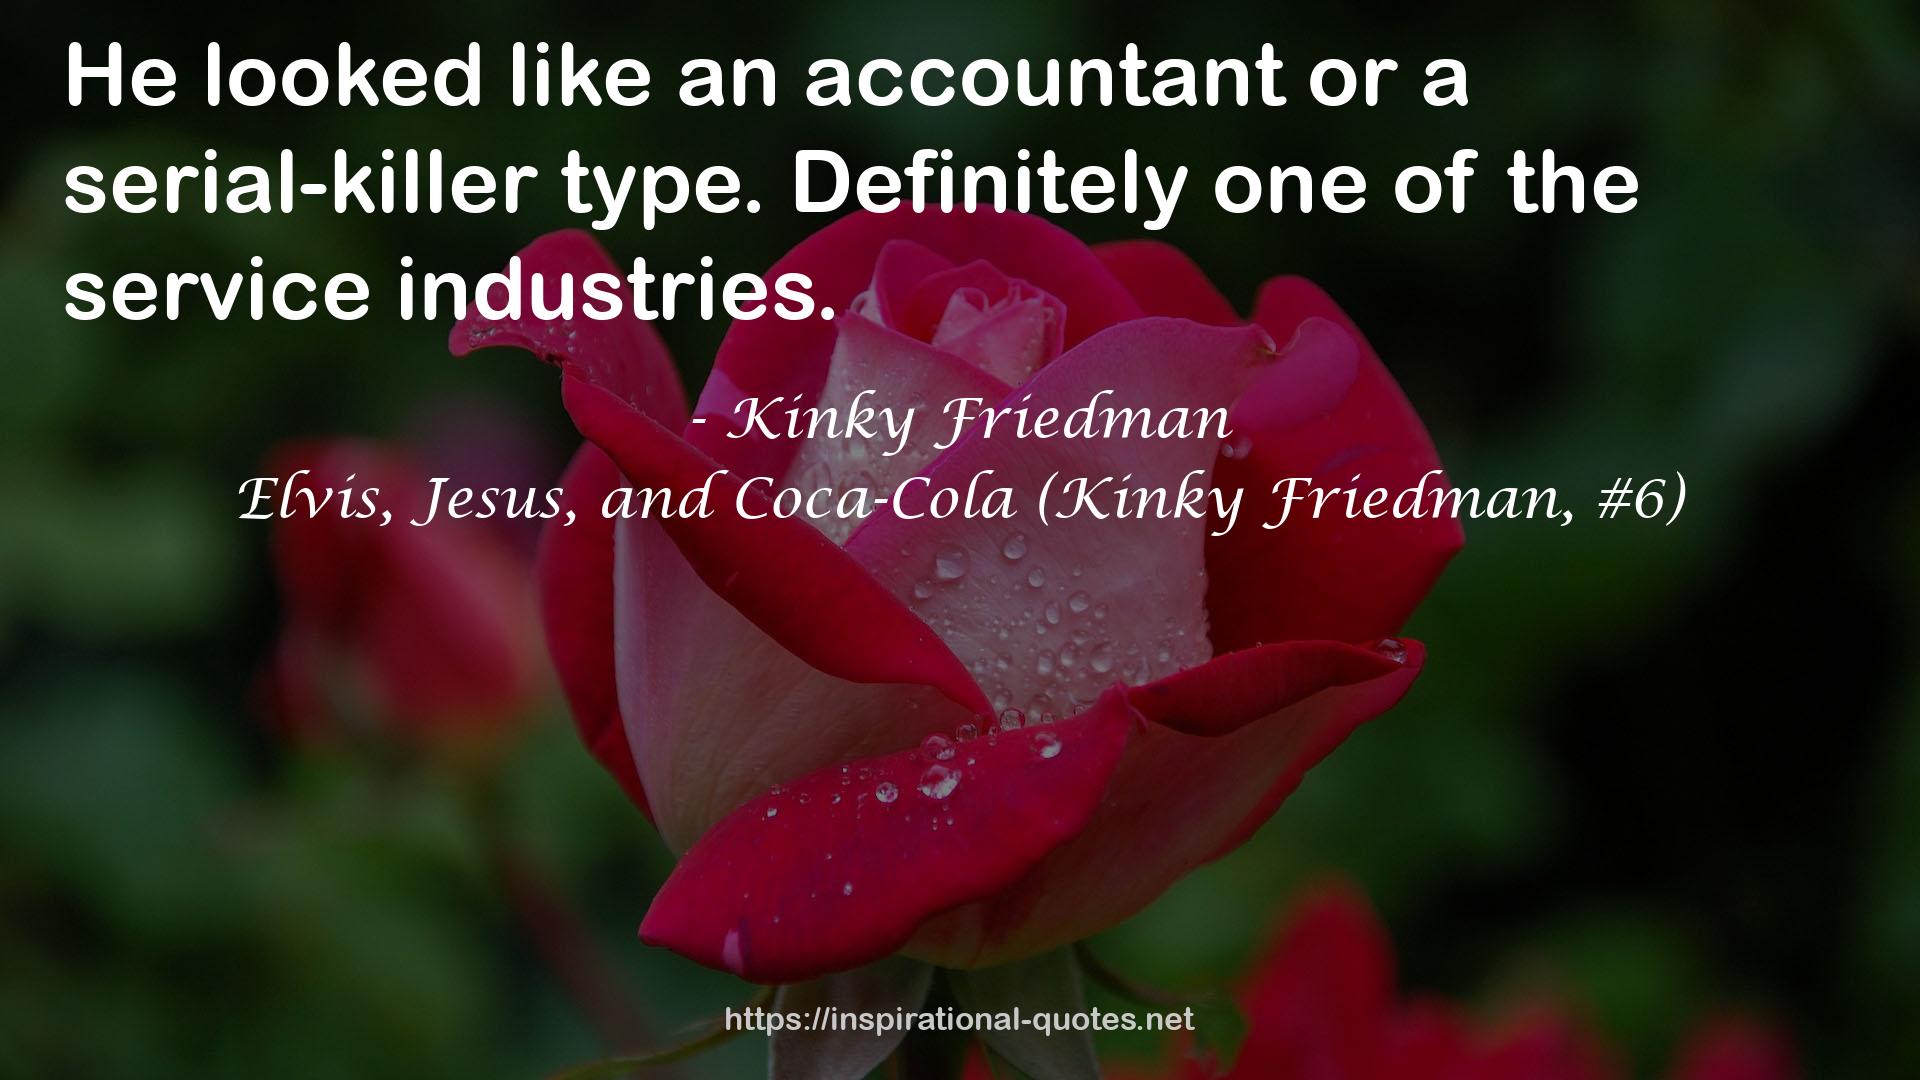 Elvis, Jesus, and Coca-Cola (Kinky Friedman, #6) QUOTES